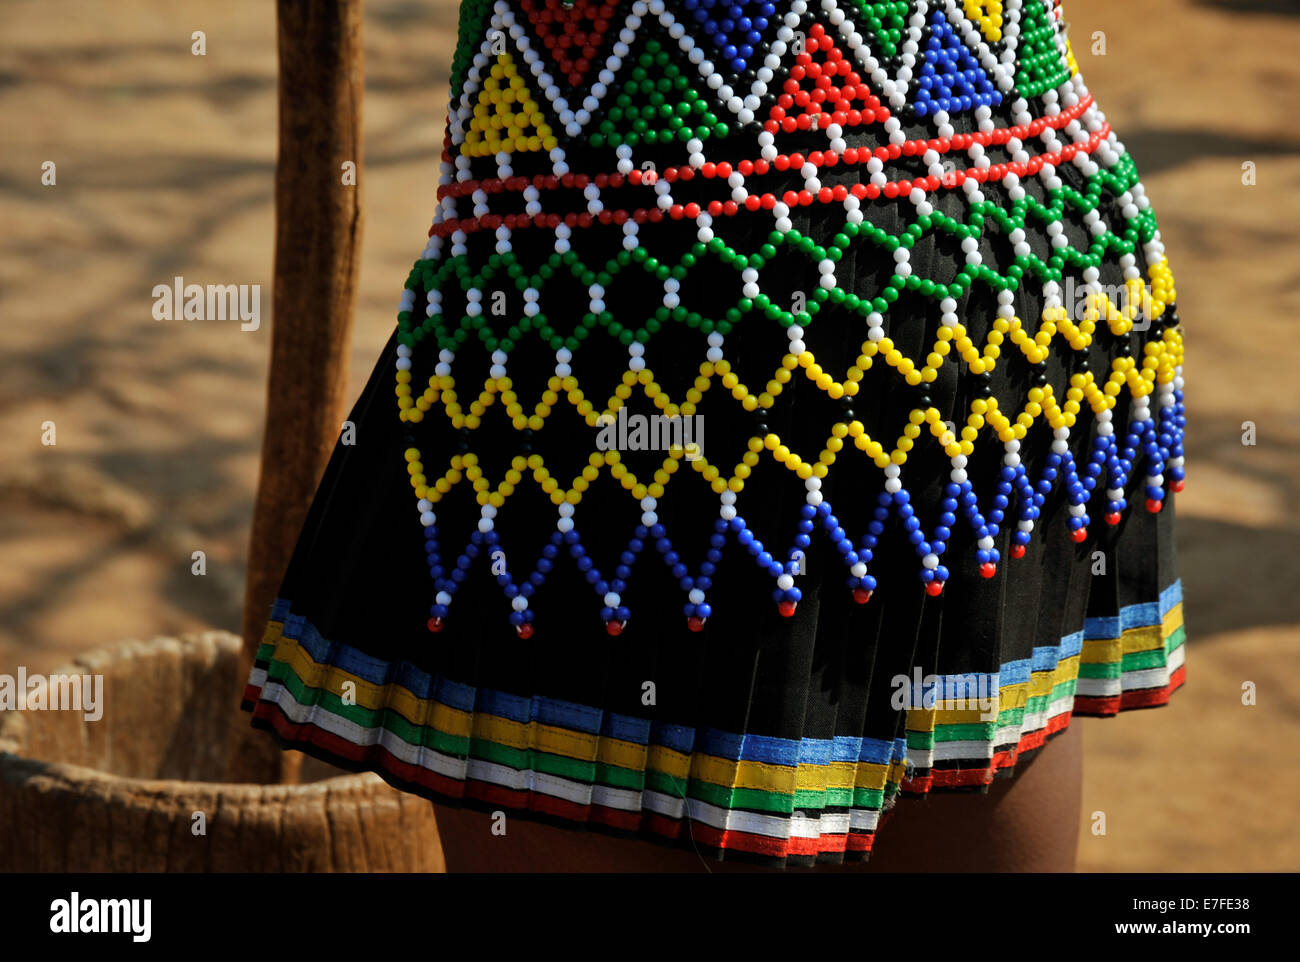 Clothes, people, culture, Eshowe, KwaZulu-Natal, South Africa, colourful beads, patterns on skirt of Zulu maiden, Shakaland theme village, woman Stock Photo